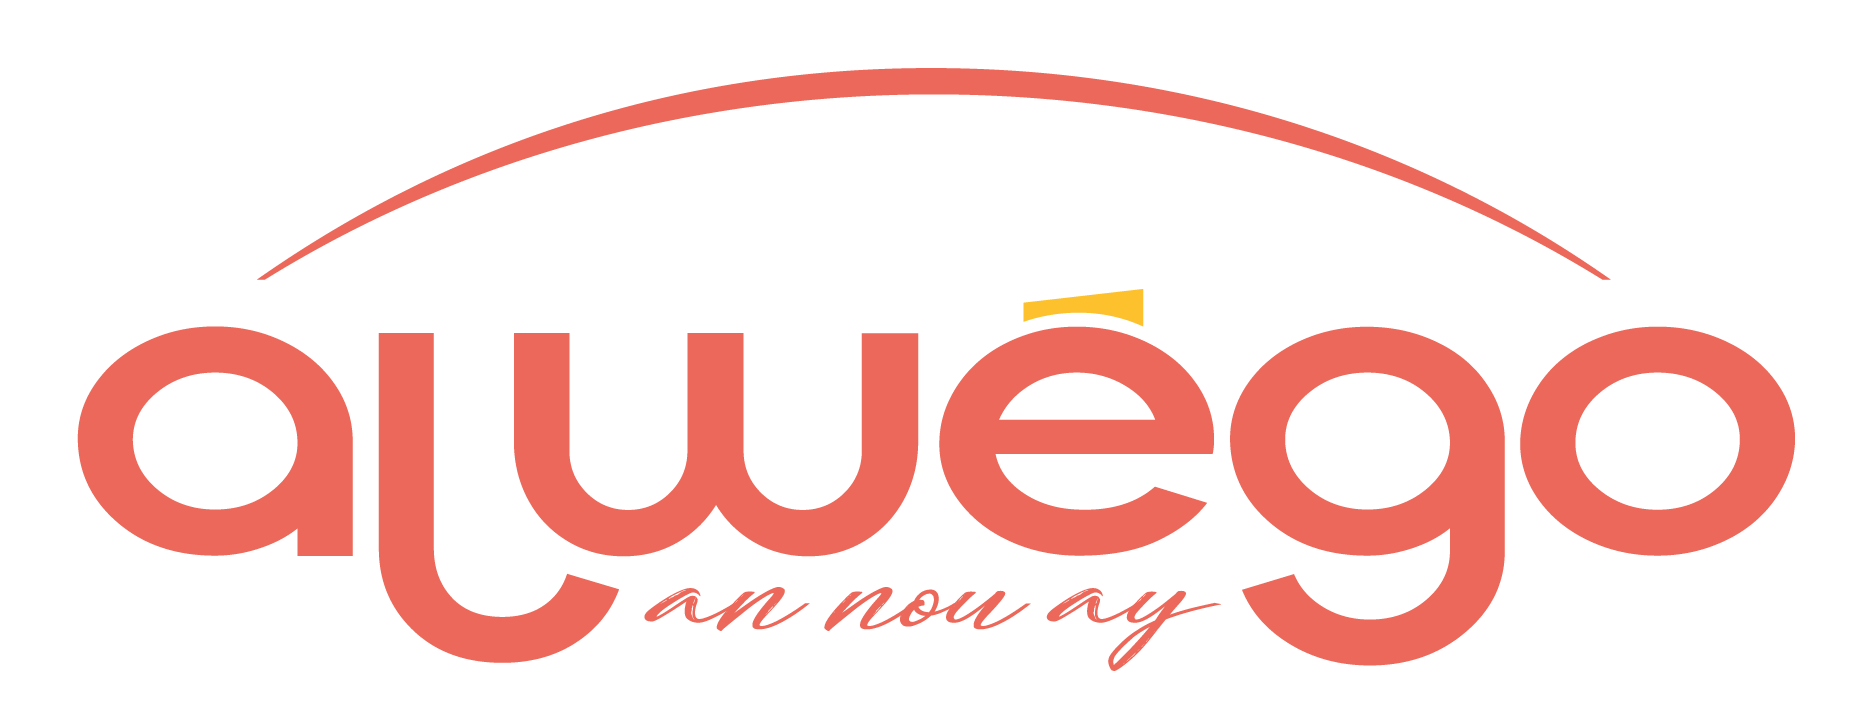 Alwego logo